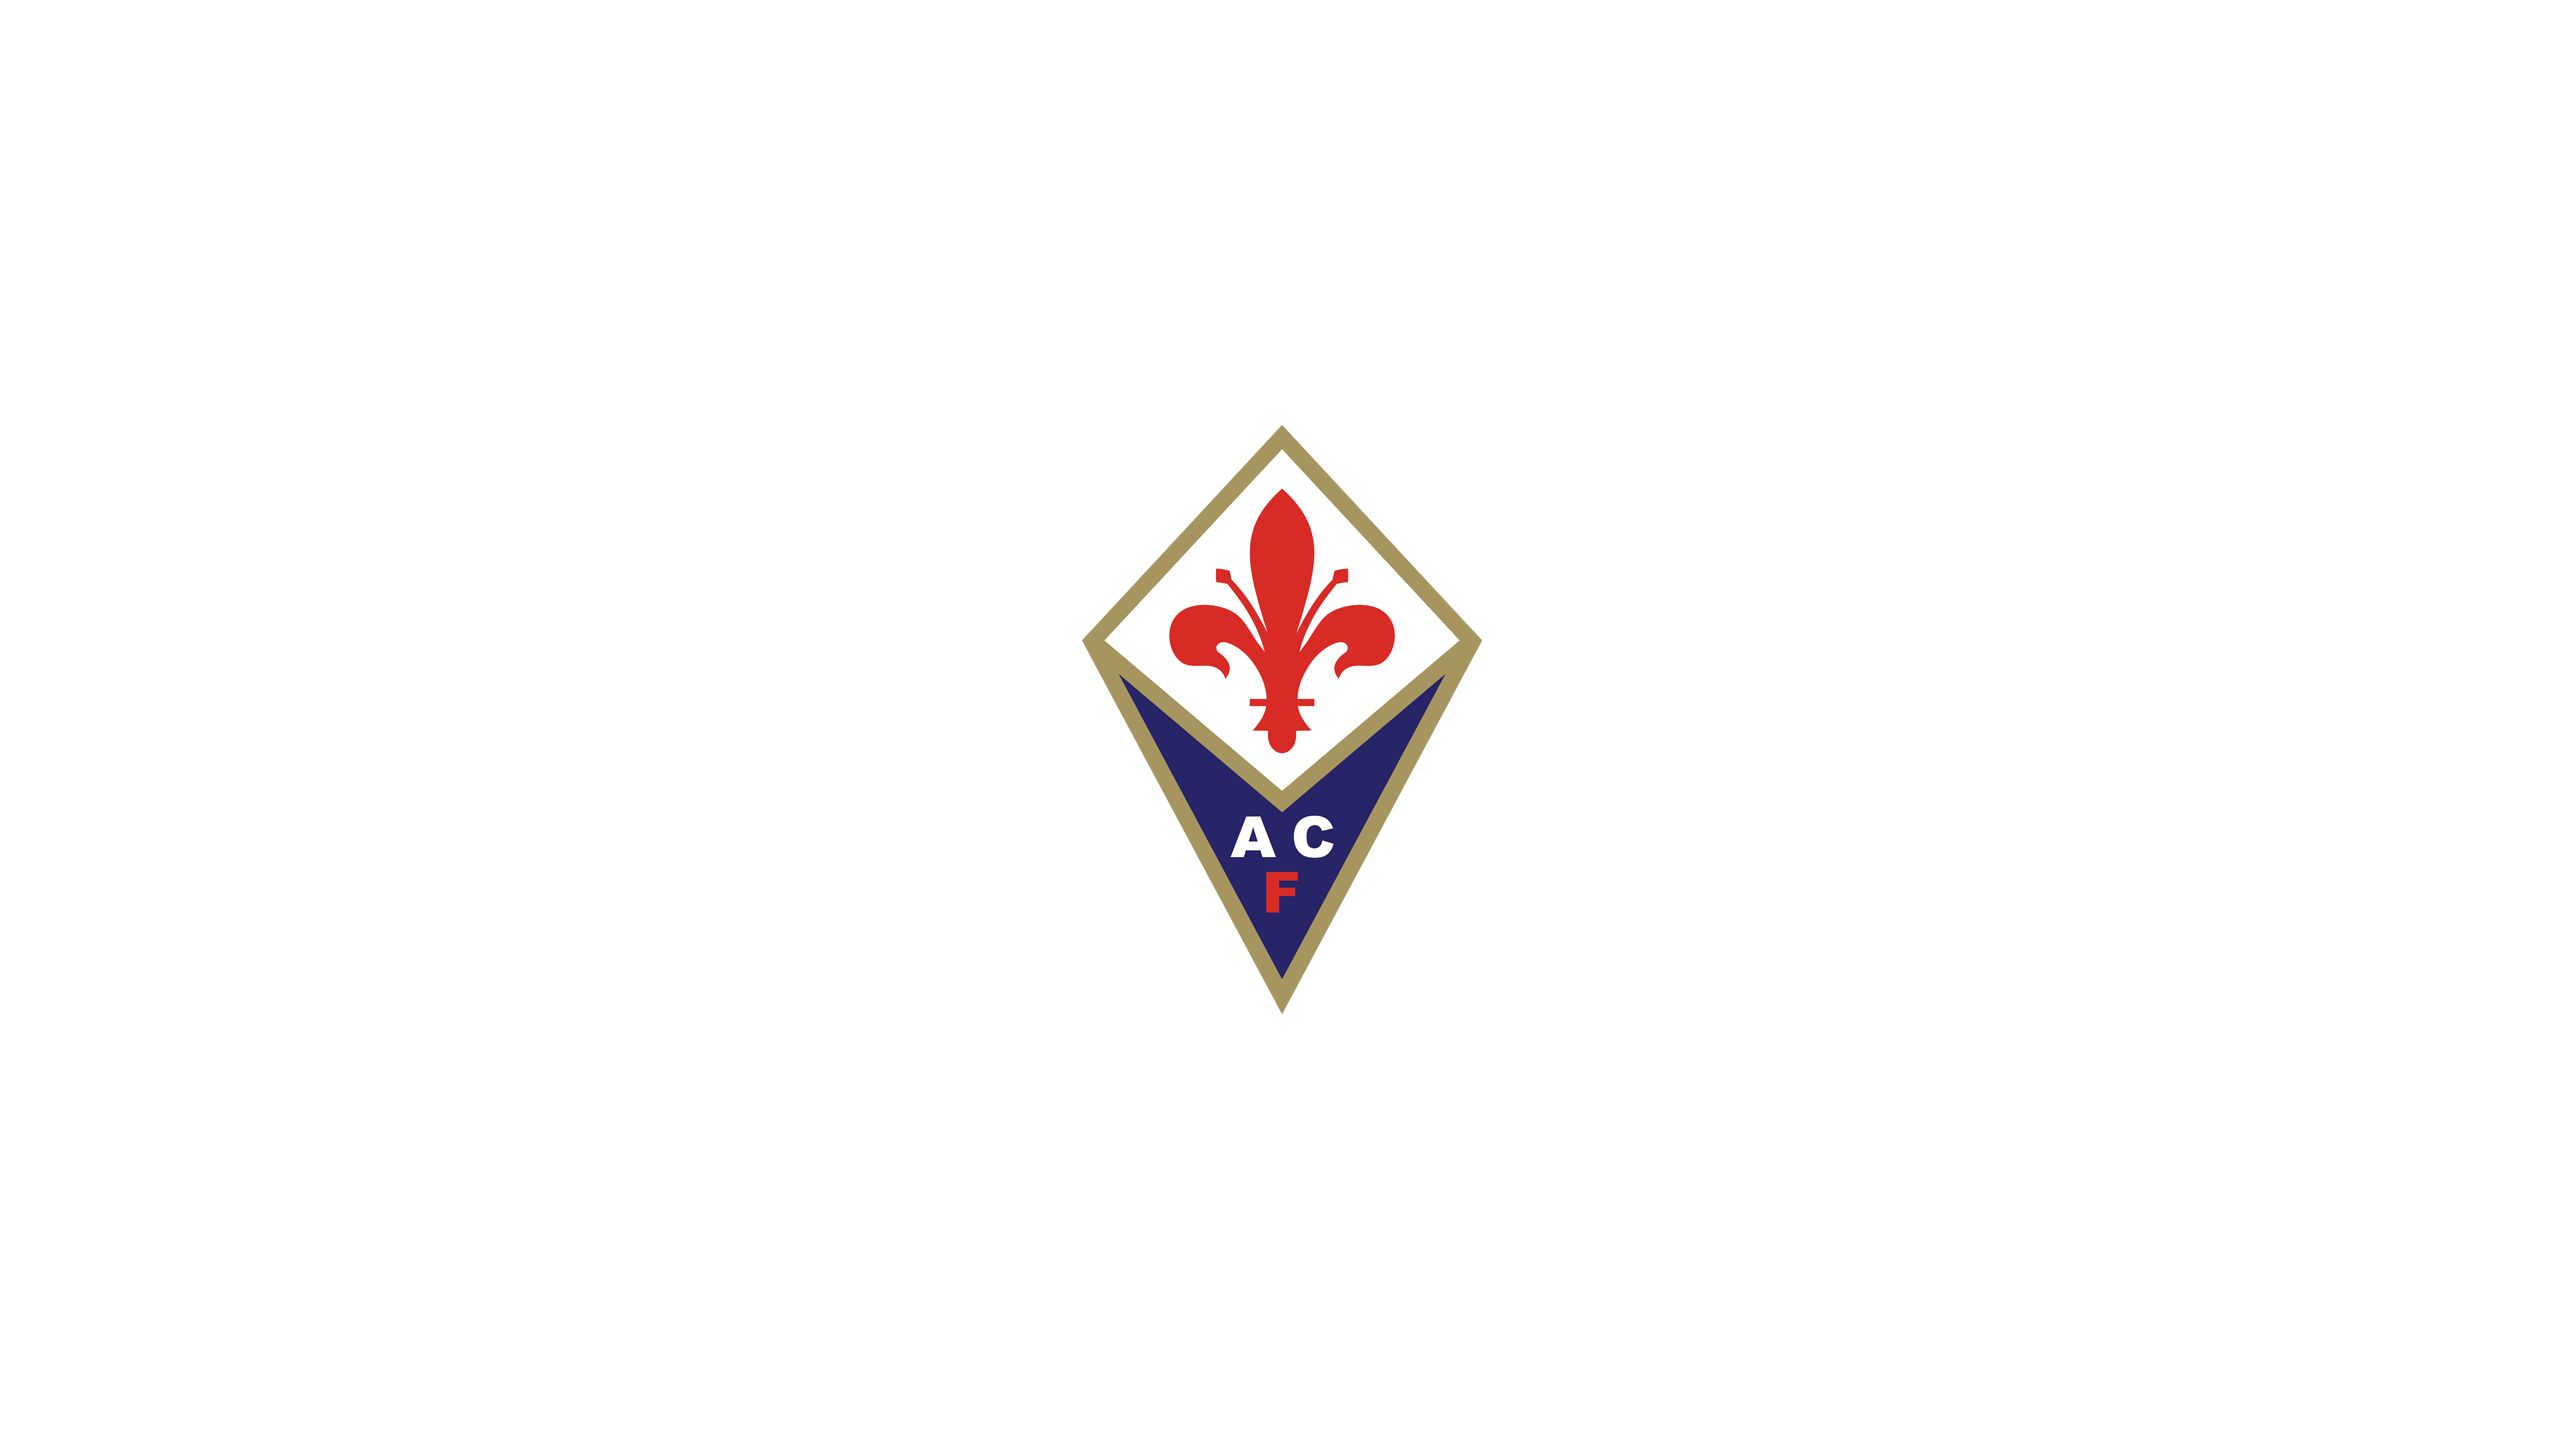 Horizontal Wallpaper sports, acf fiorentina, emblem, logo, soccer